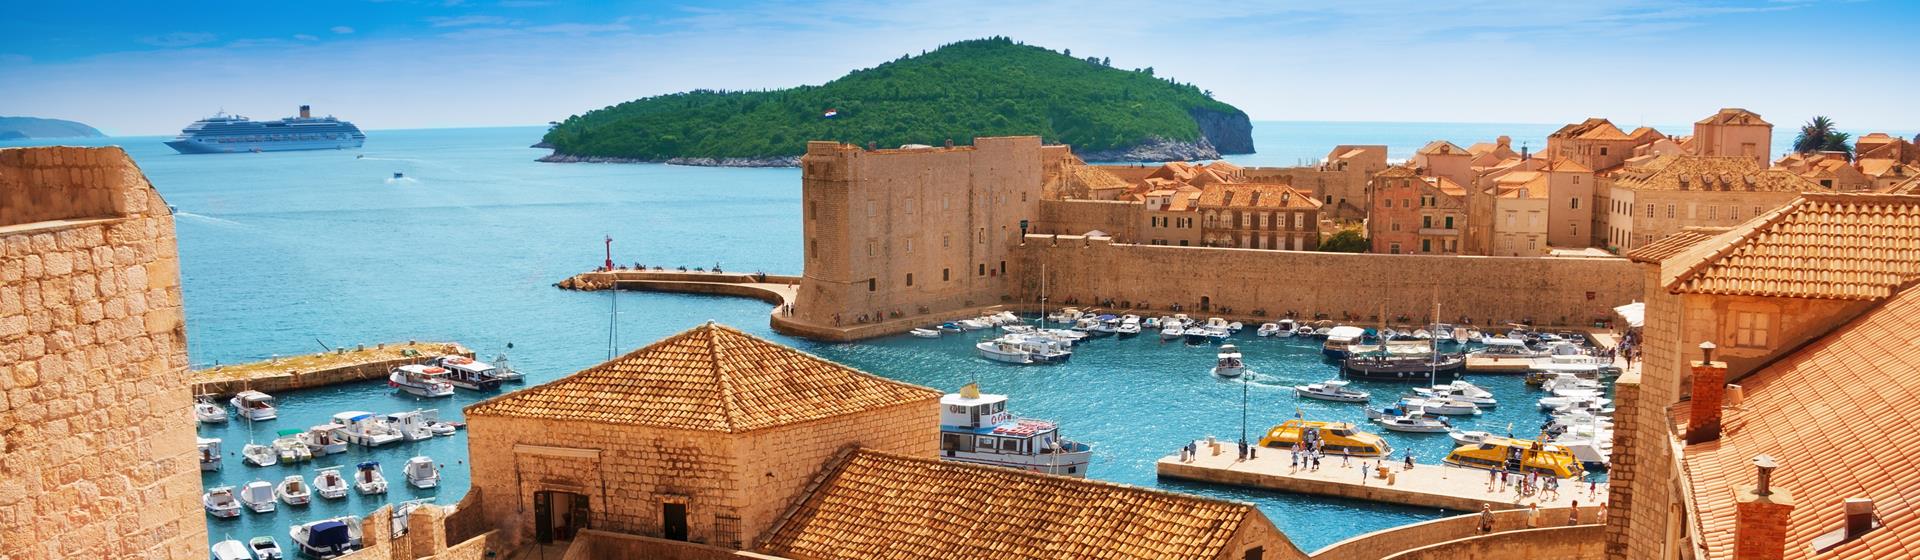 Holidays & City Breaks to Dubrovnik